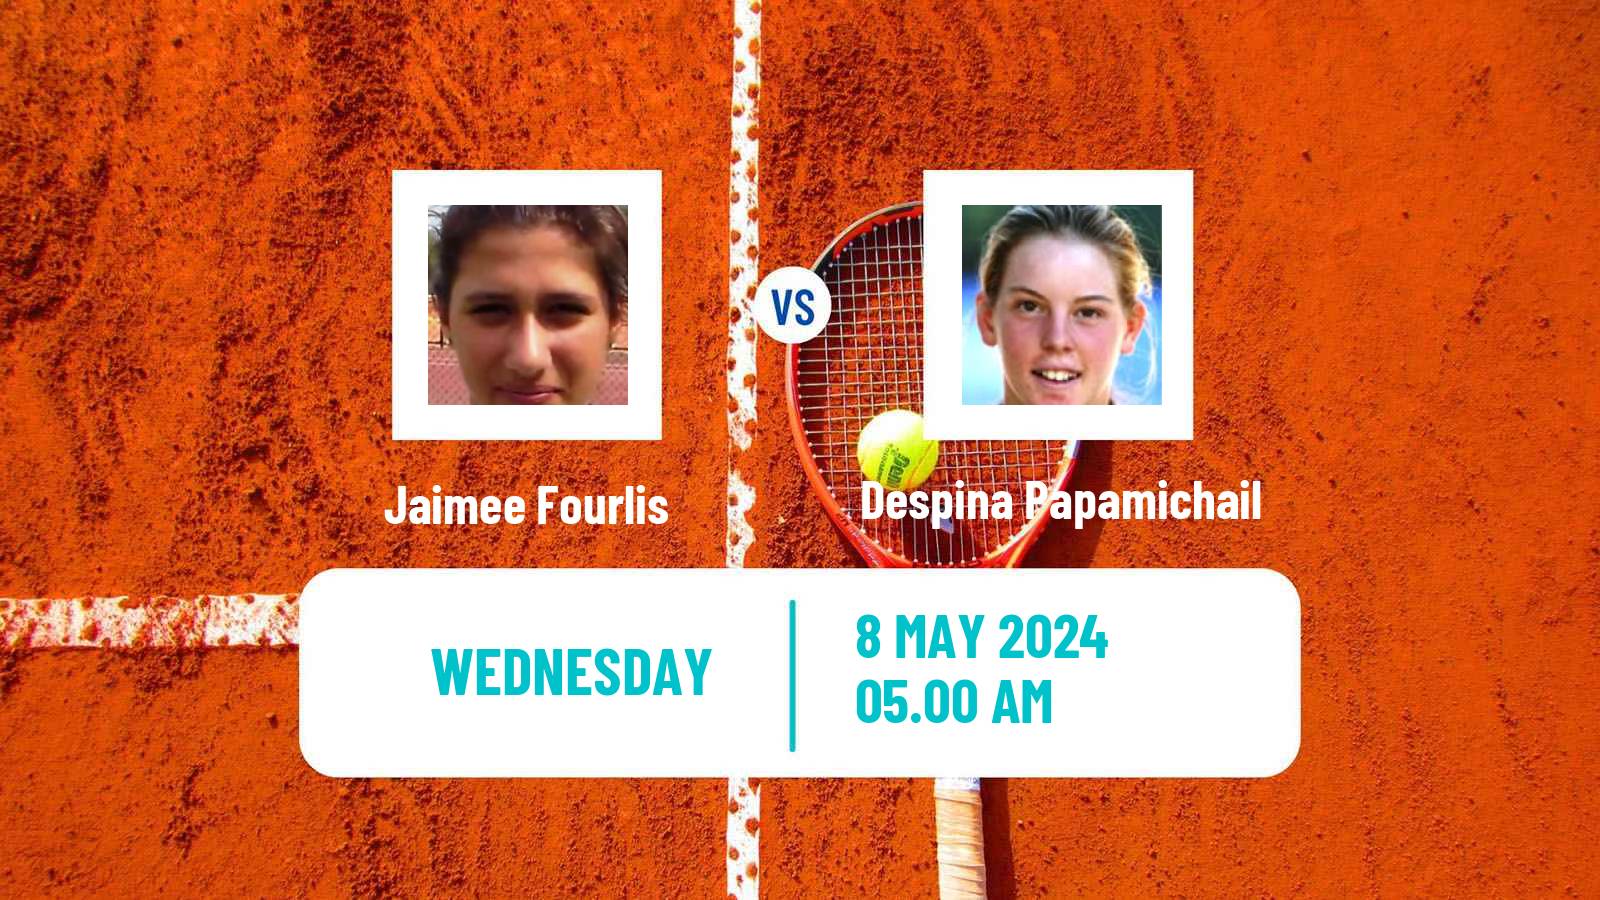 Tennis ITF W75 Prague Women Jaimee Fourlis - Despina Papamichail